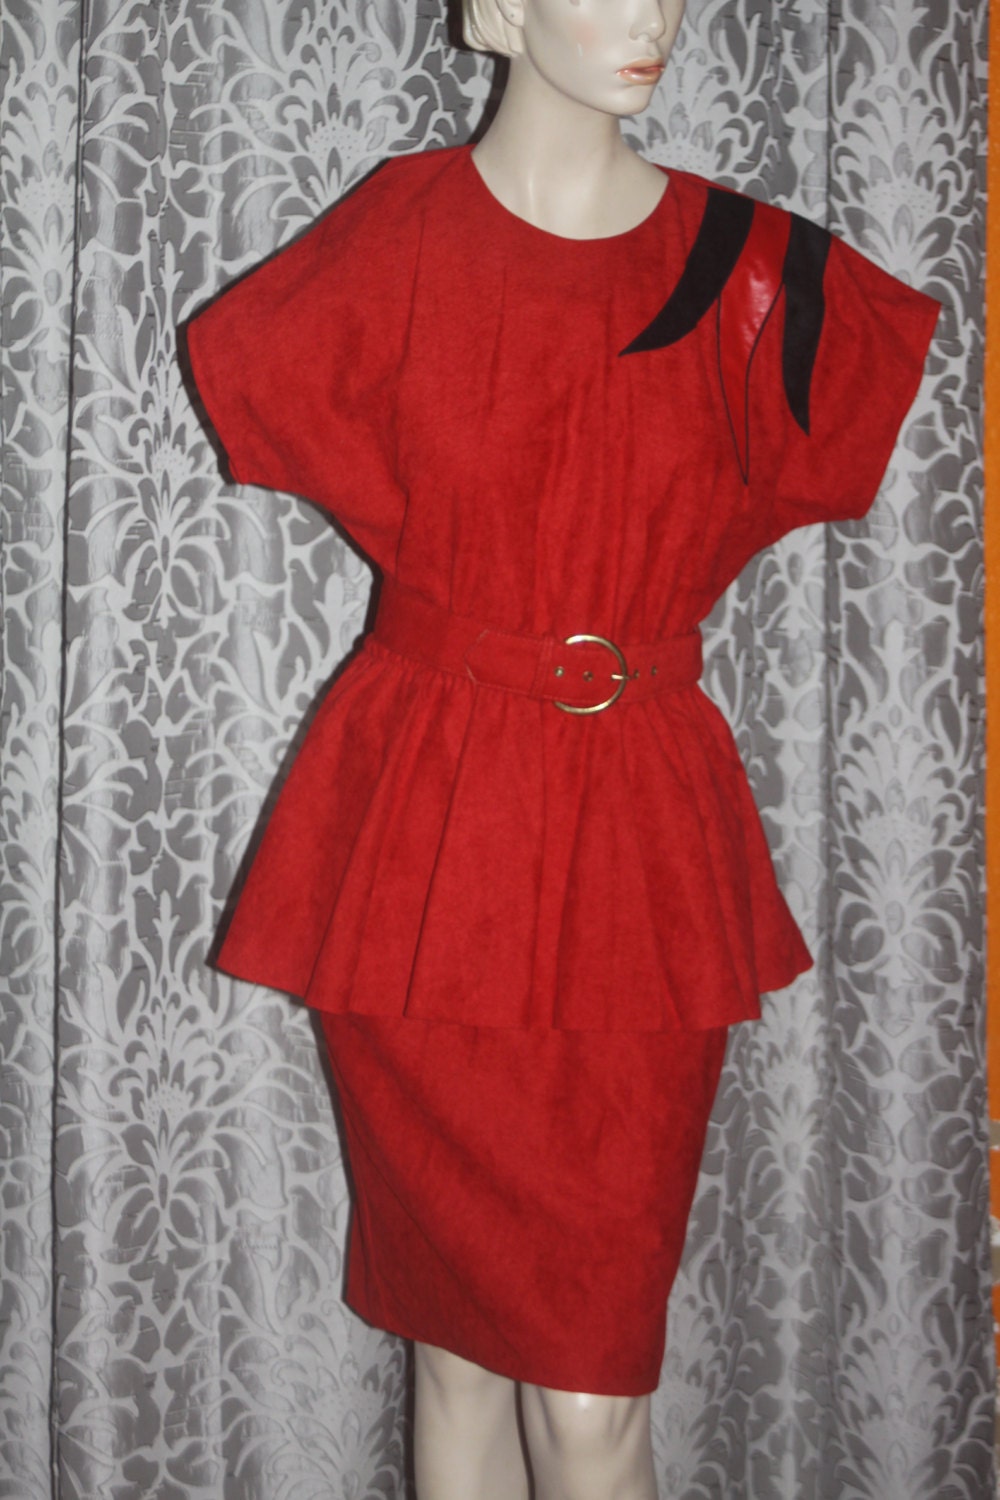 Vintage 1980's Mod Bold Red Peplum Dress M 9